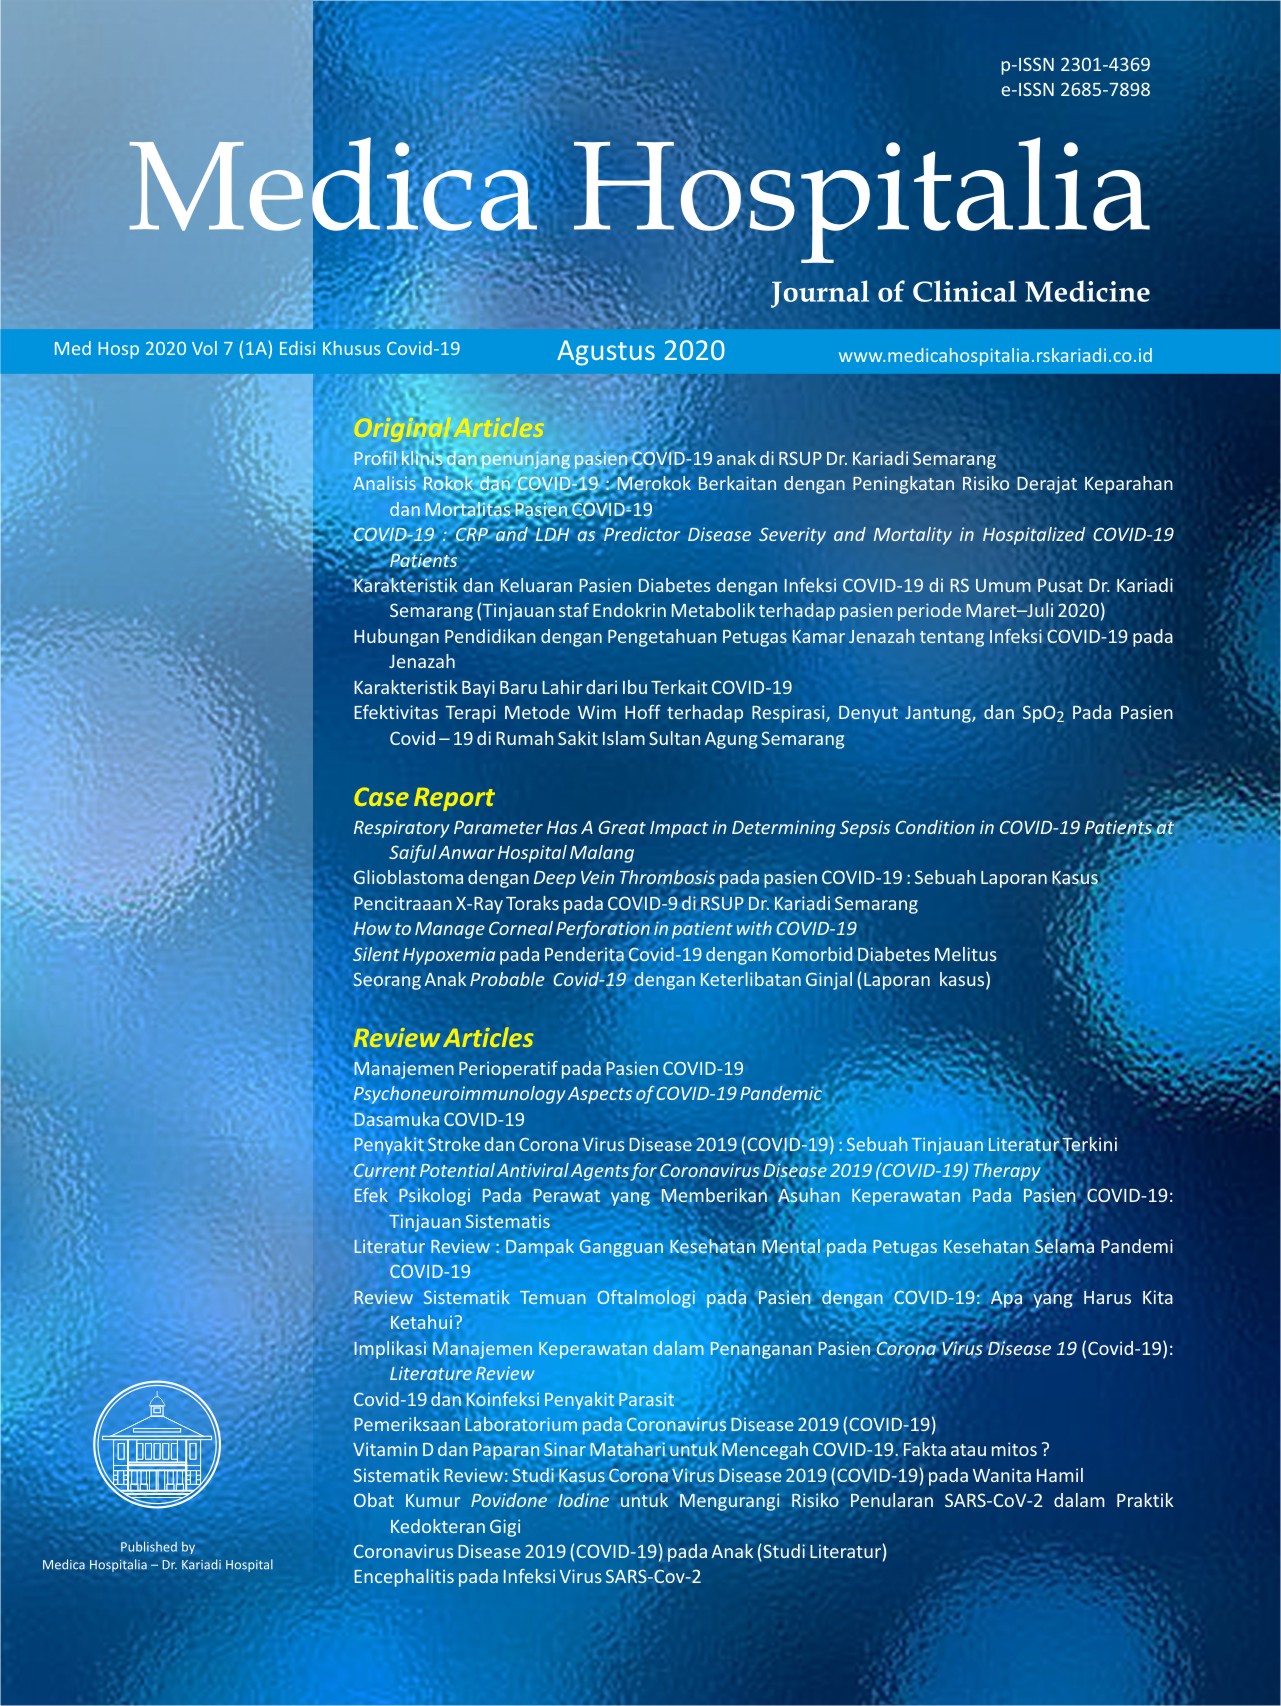 Coronavirus Disease 2019 Covid 19 Pada Anak Studi Literatur Medica Hospitalia Journal Of Clinical Medicine